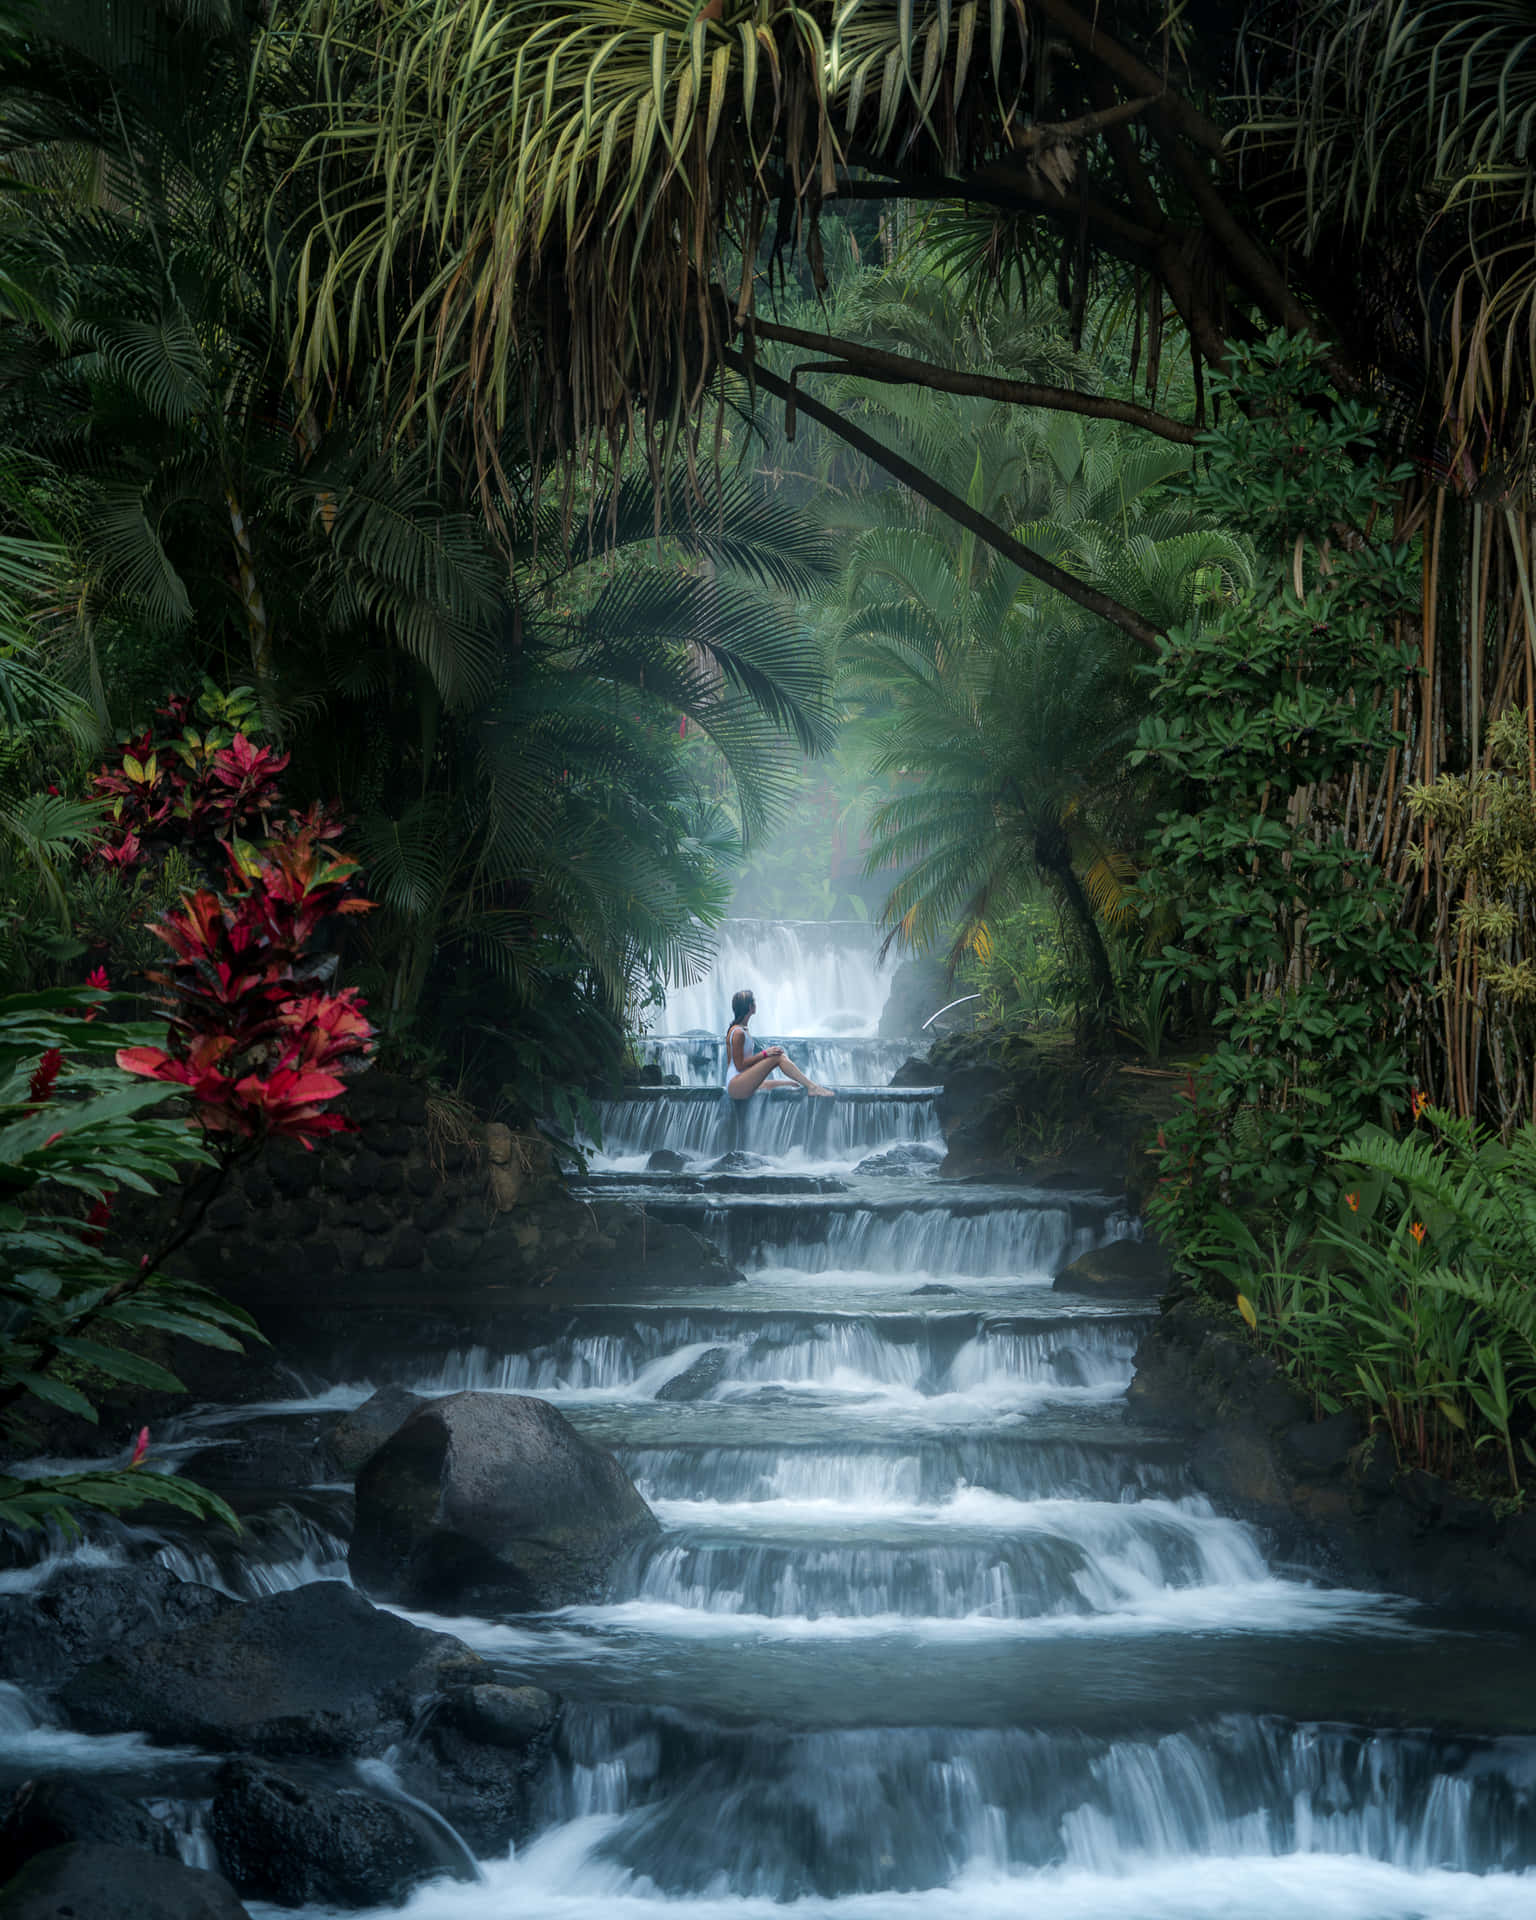 Enjoy Stunning Views of Costa Rica's Natural Beauty